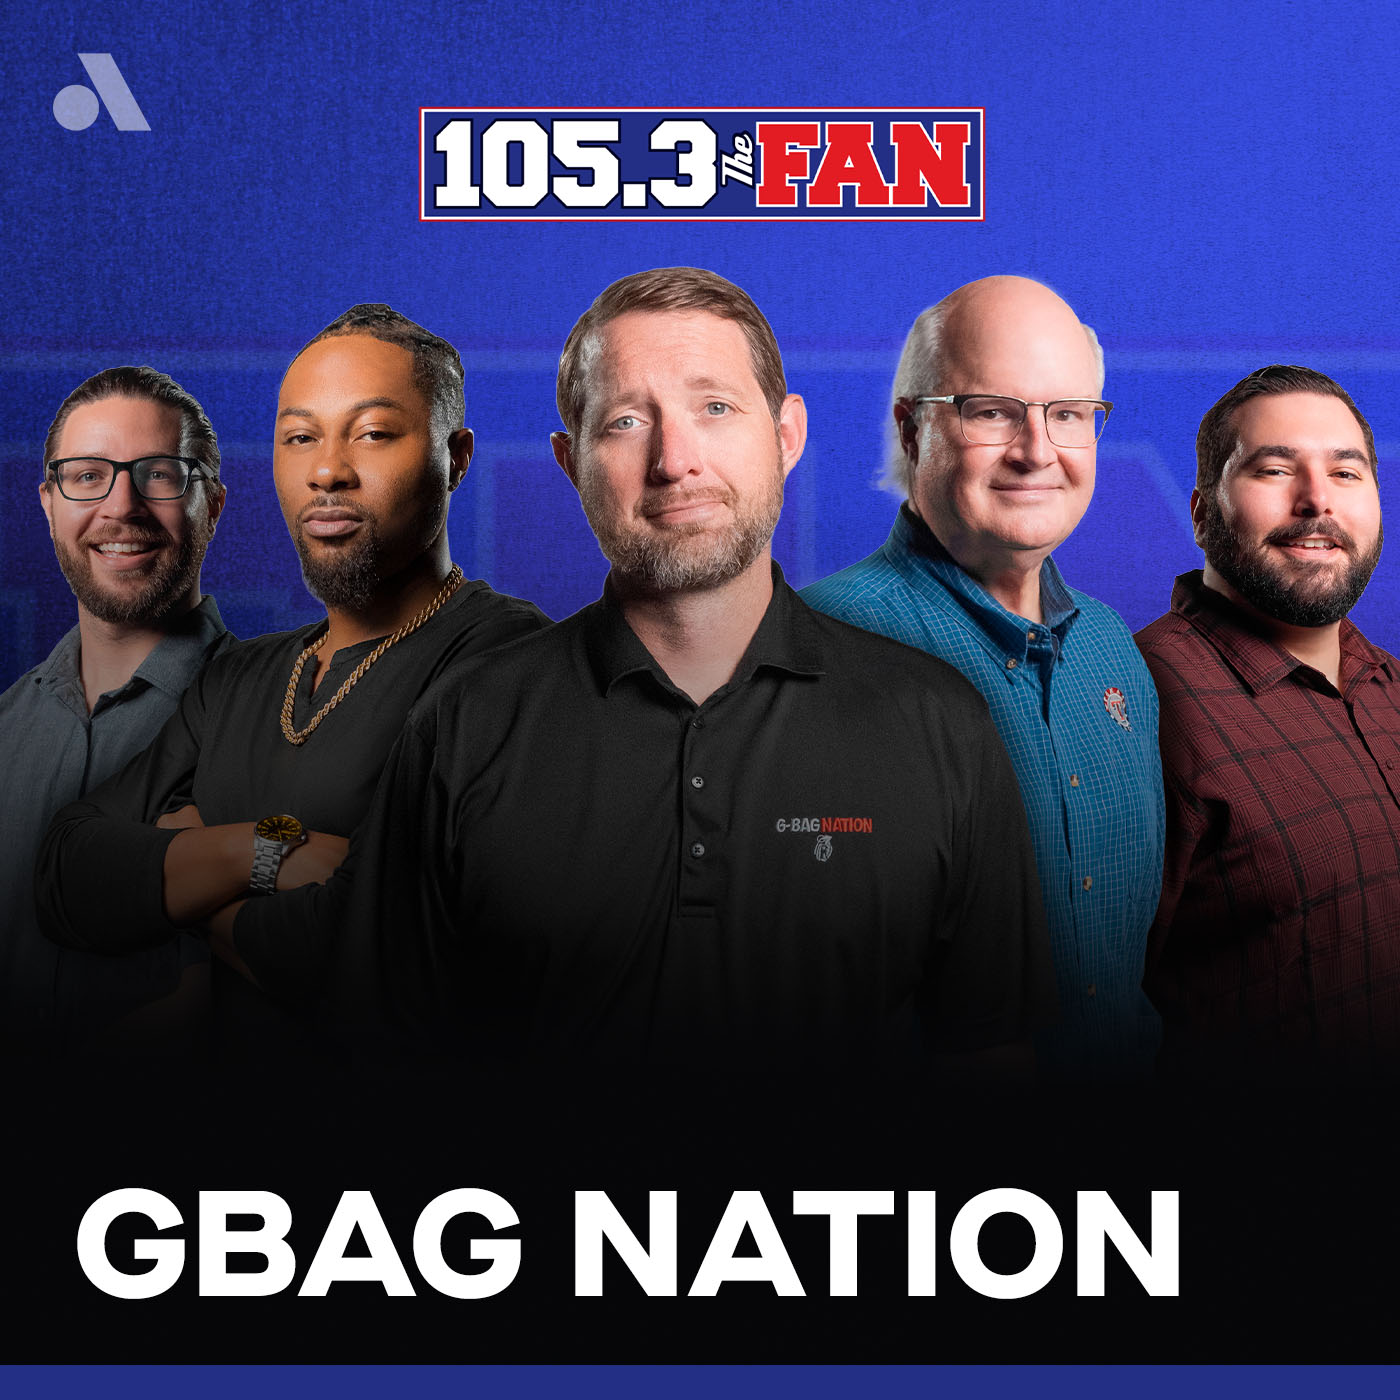 Texas Rangers HOF Radio pxp voice Eric Nadel joins the Nation